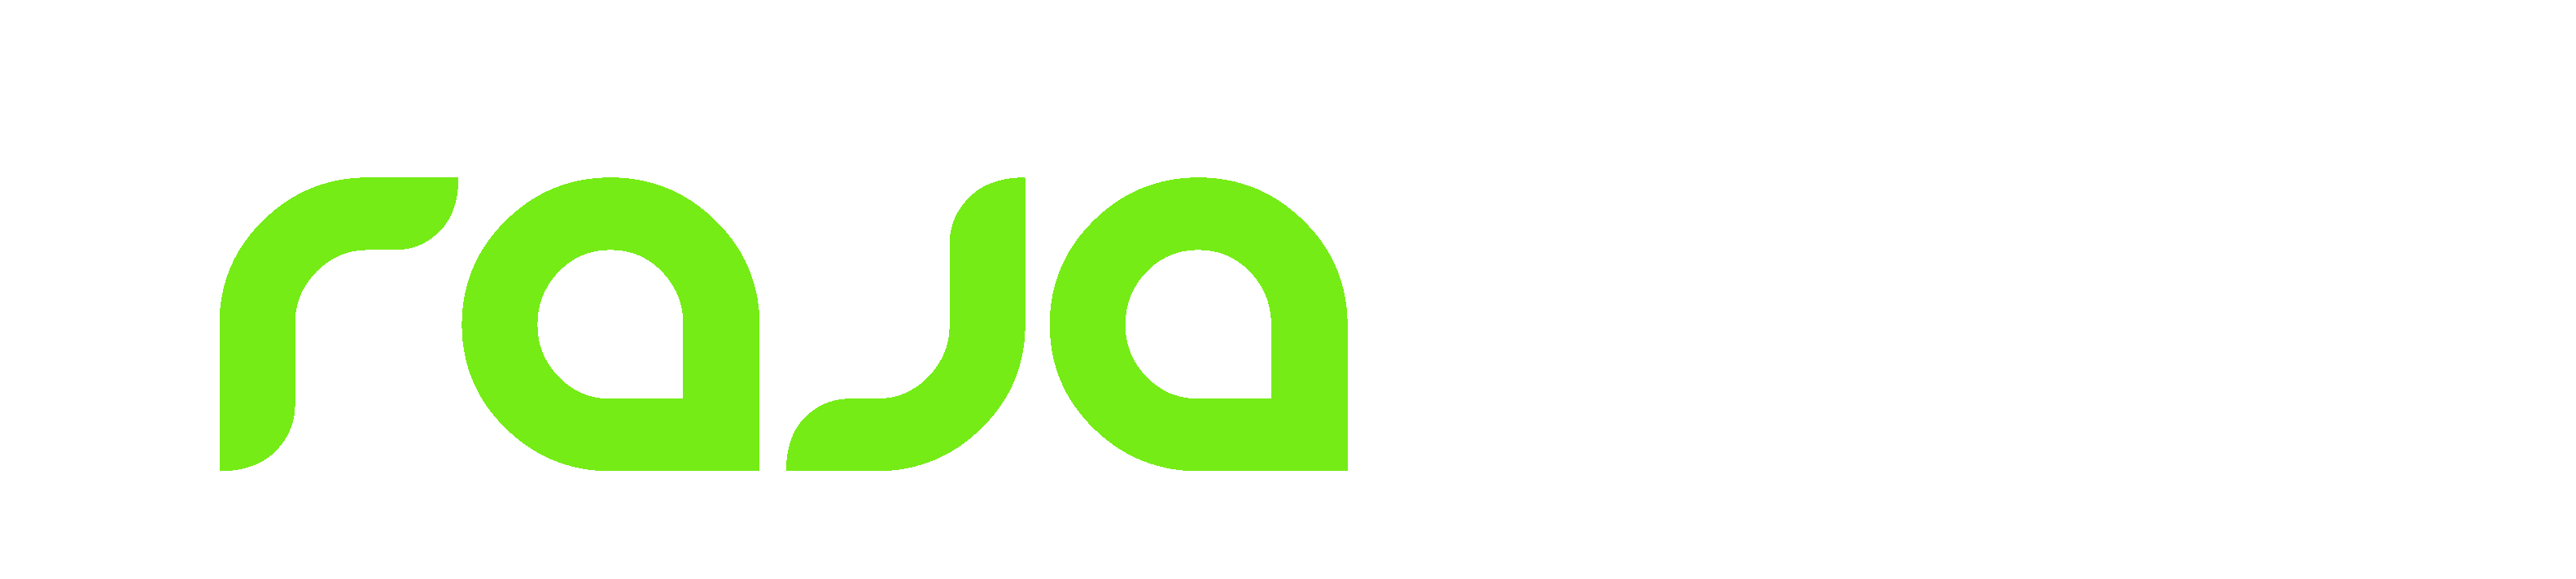 rajabaji logo